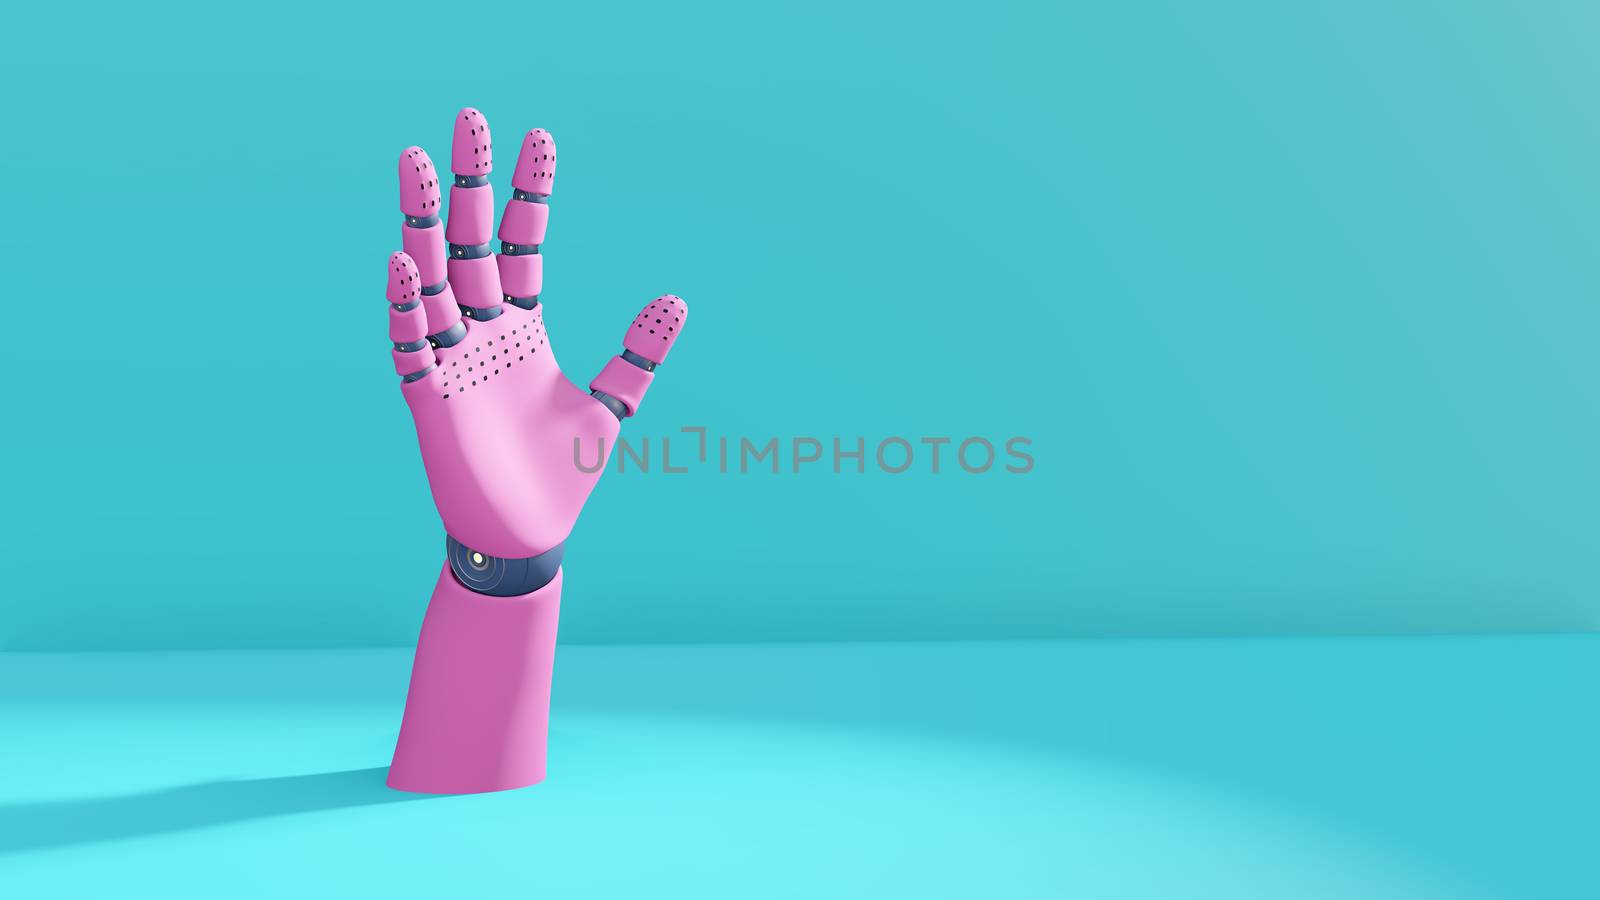 3D illustration, robot hand mannequin body part by cherezoff